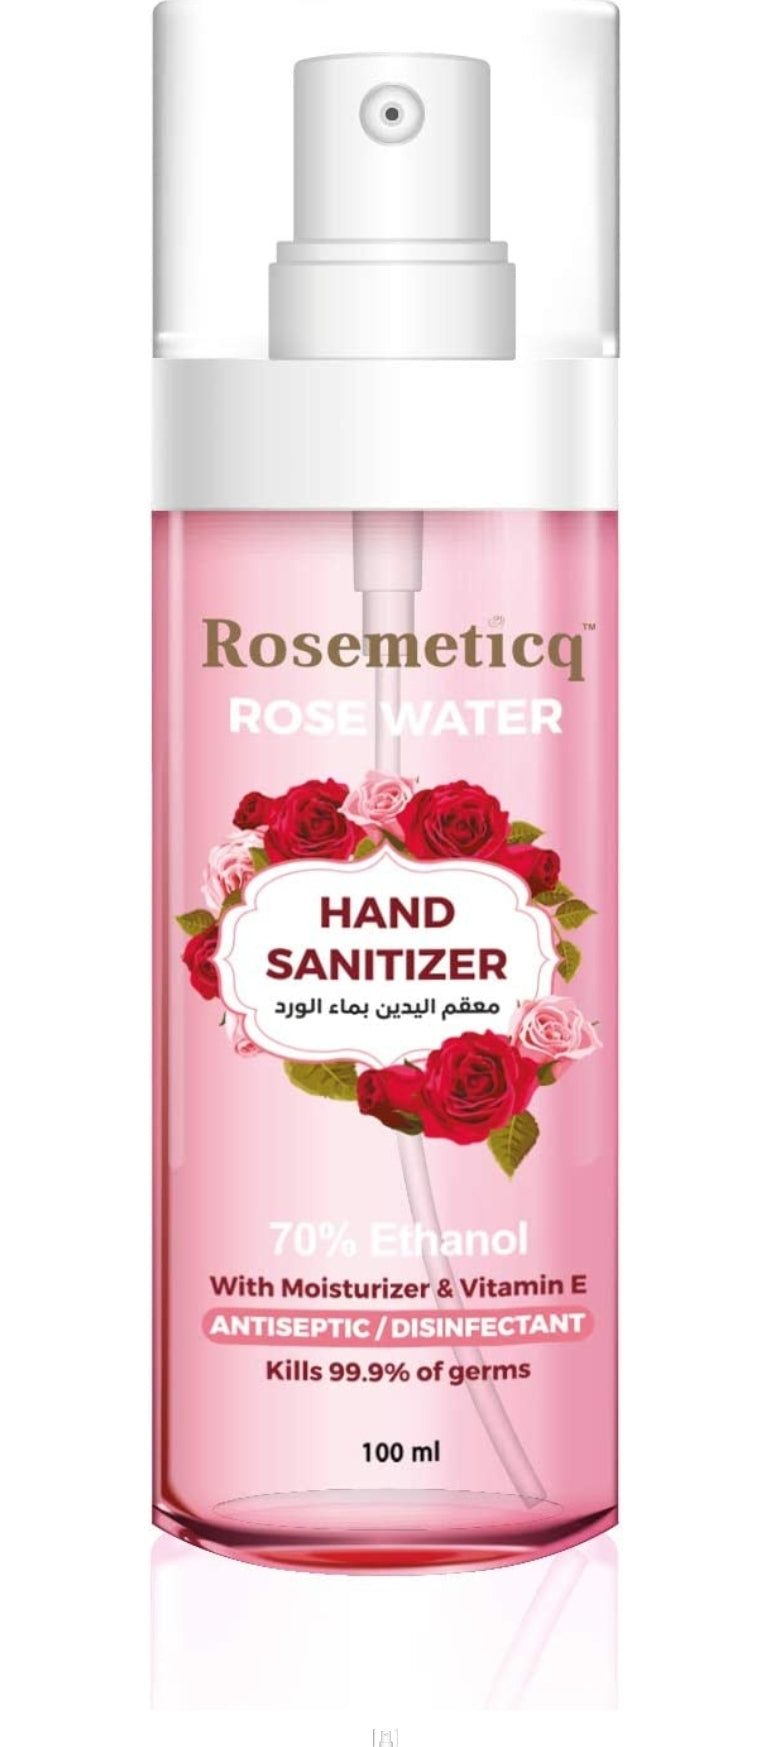 Rosemeticq Rose Water Hand Sanitizer